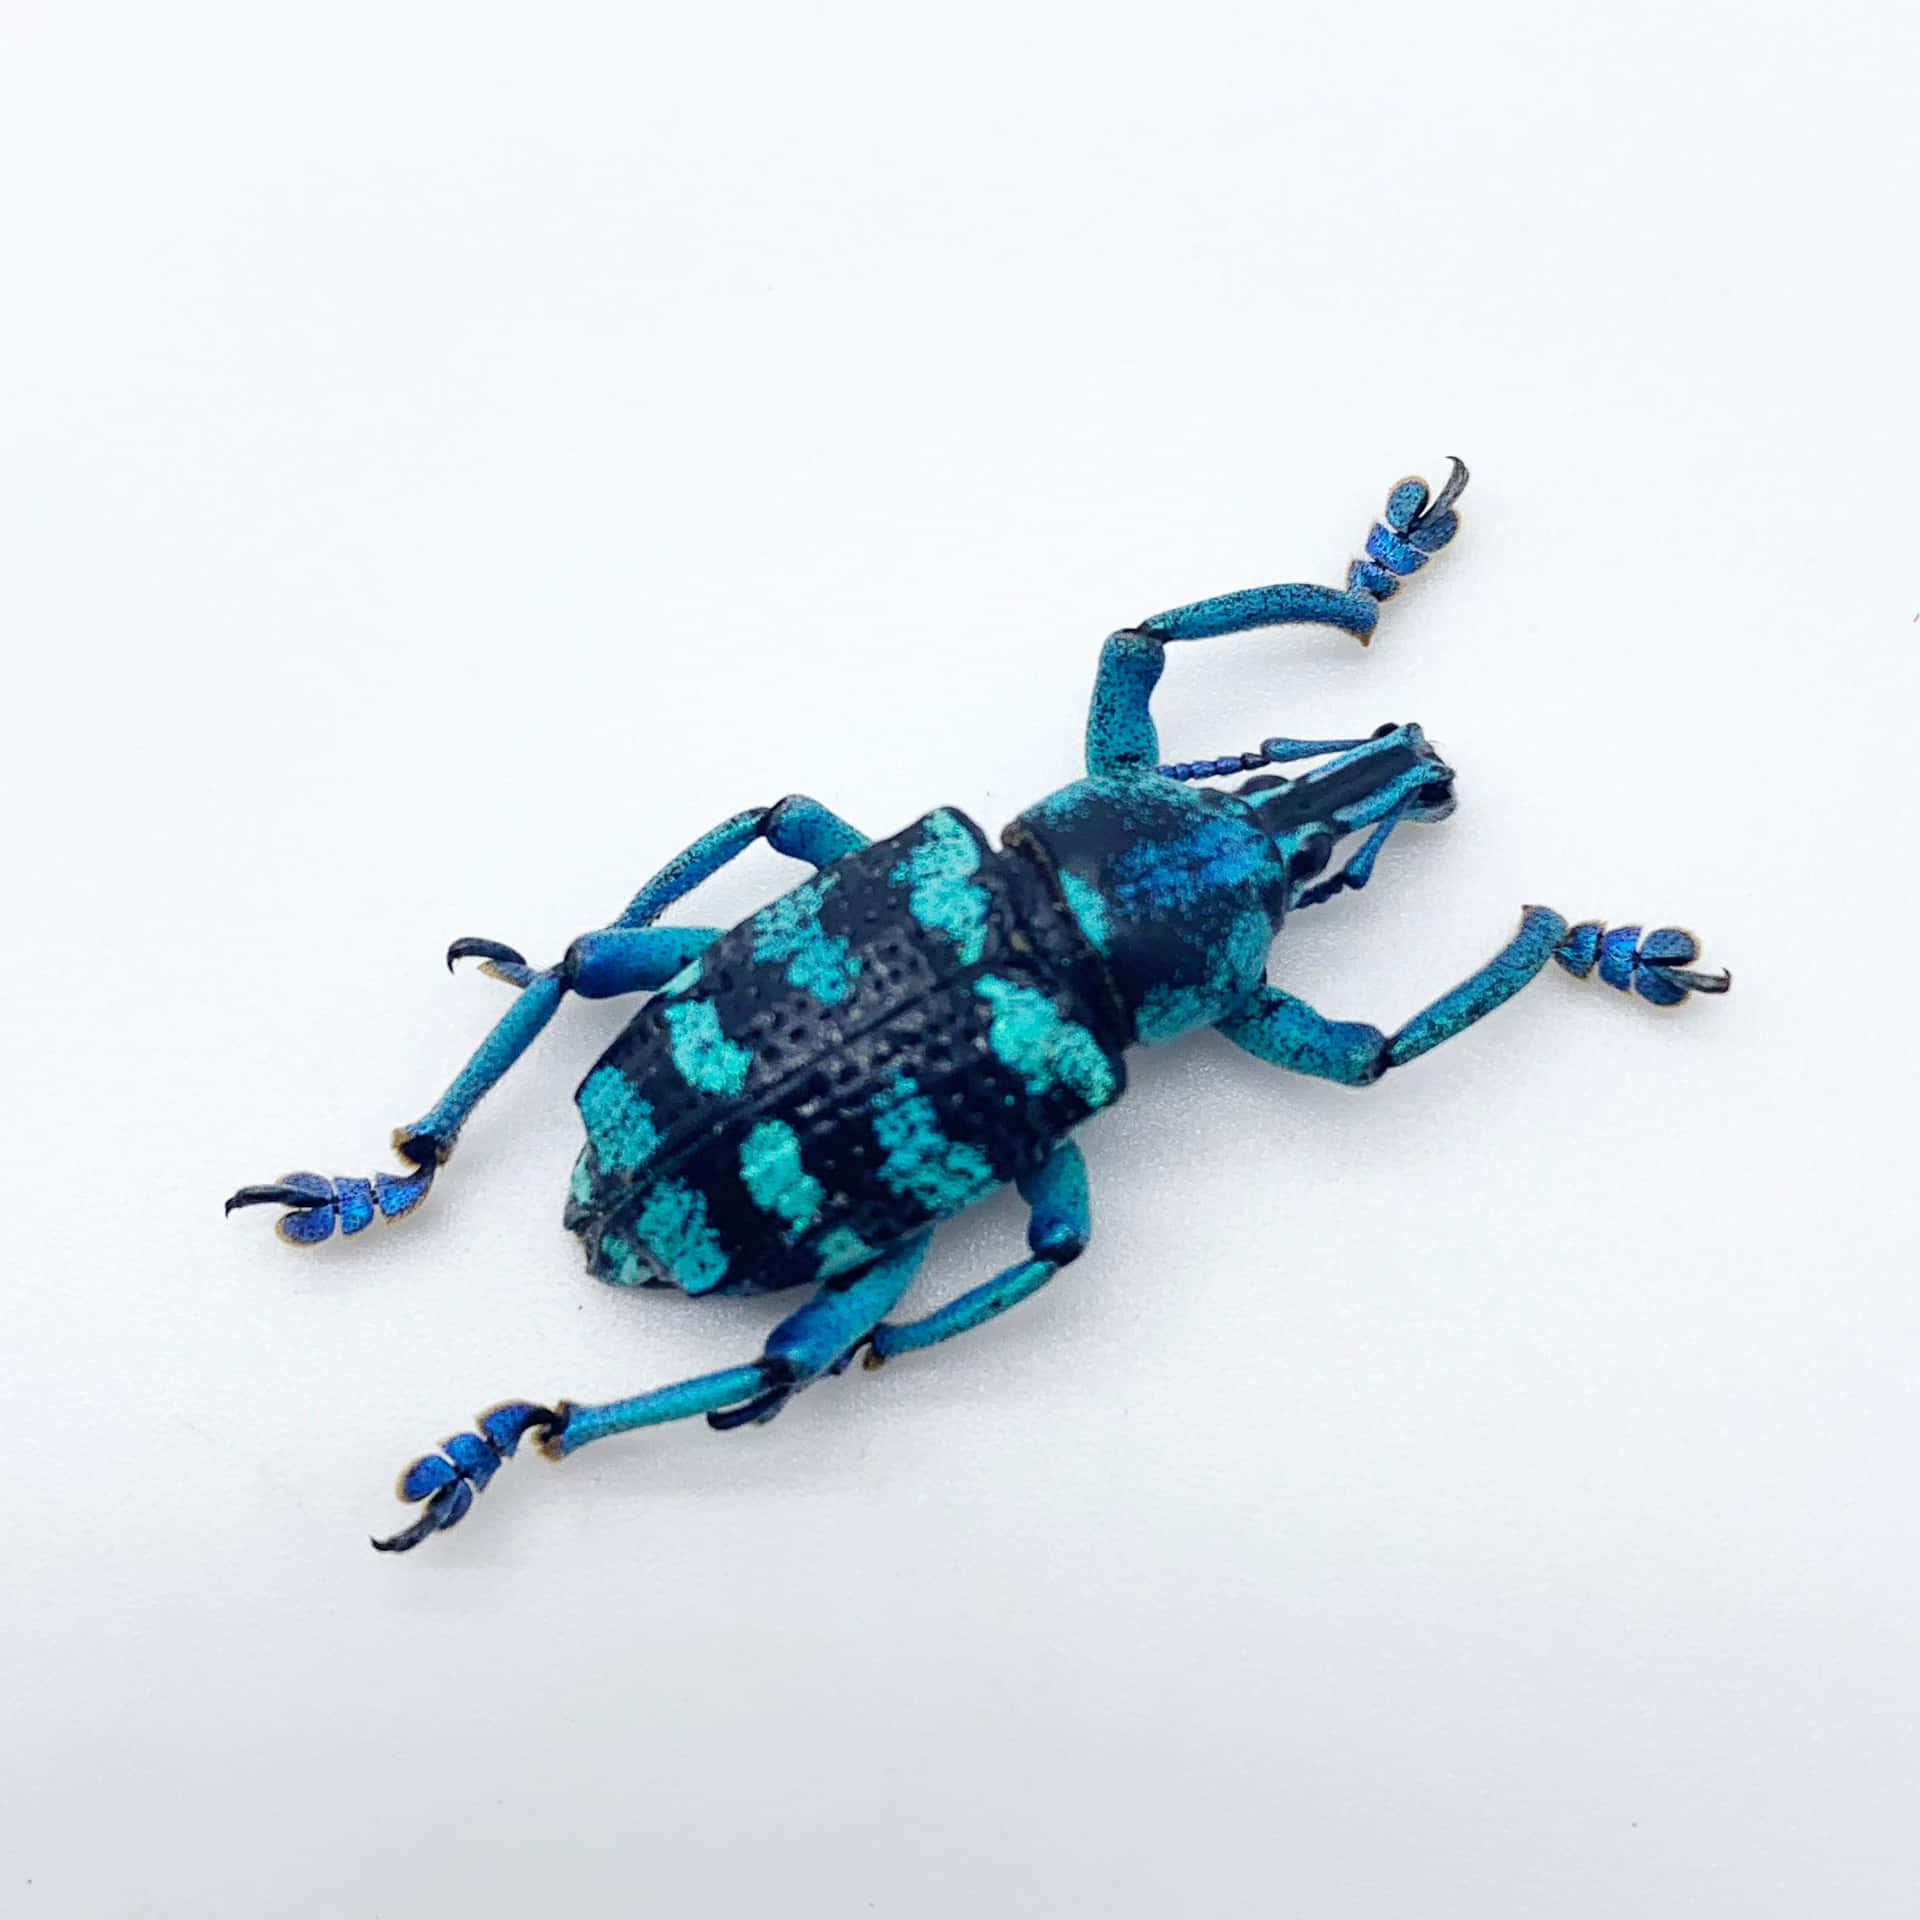 Blue Patterned Snout Beetle Wallpaper